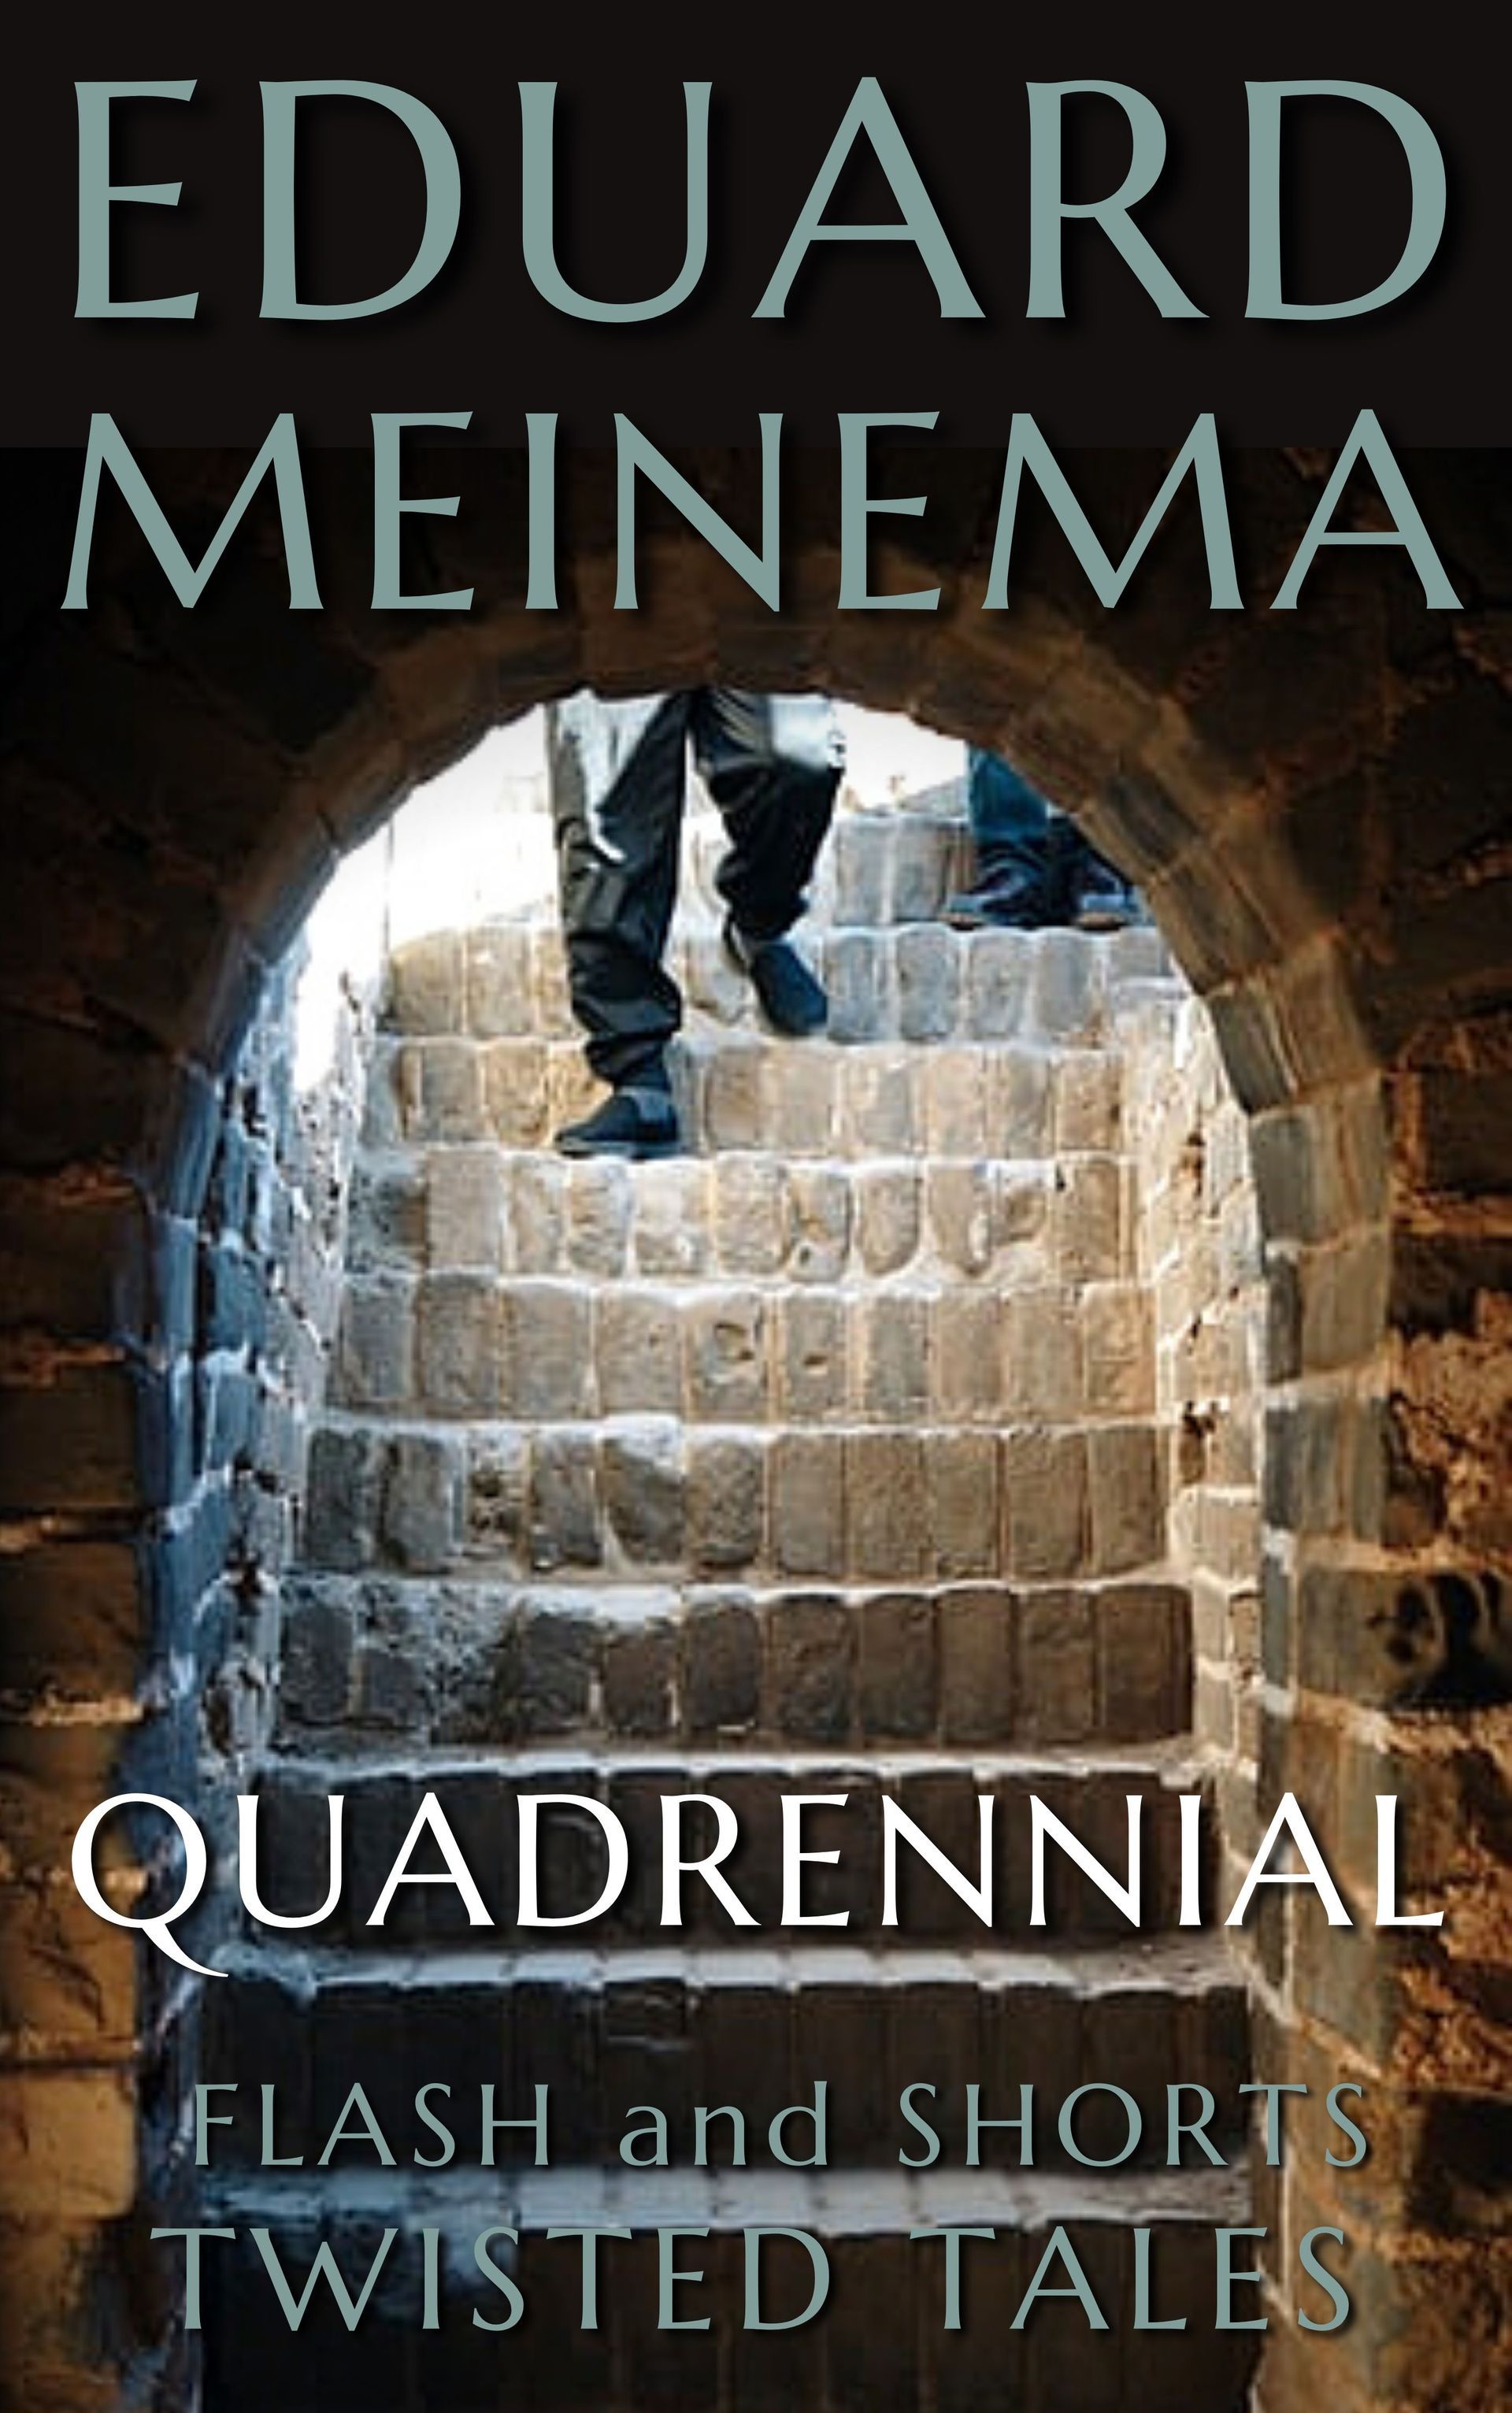 Quadrennial, Flash Fiction story by Eduard Meinema.